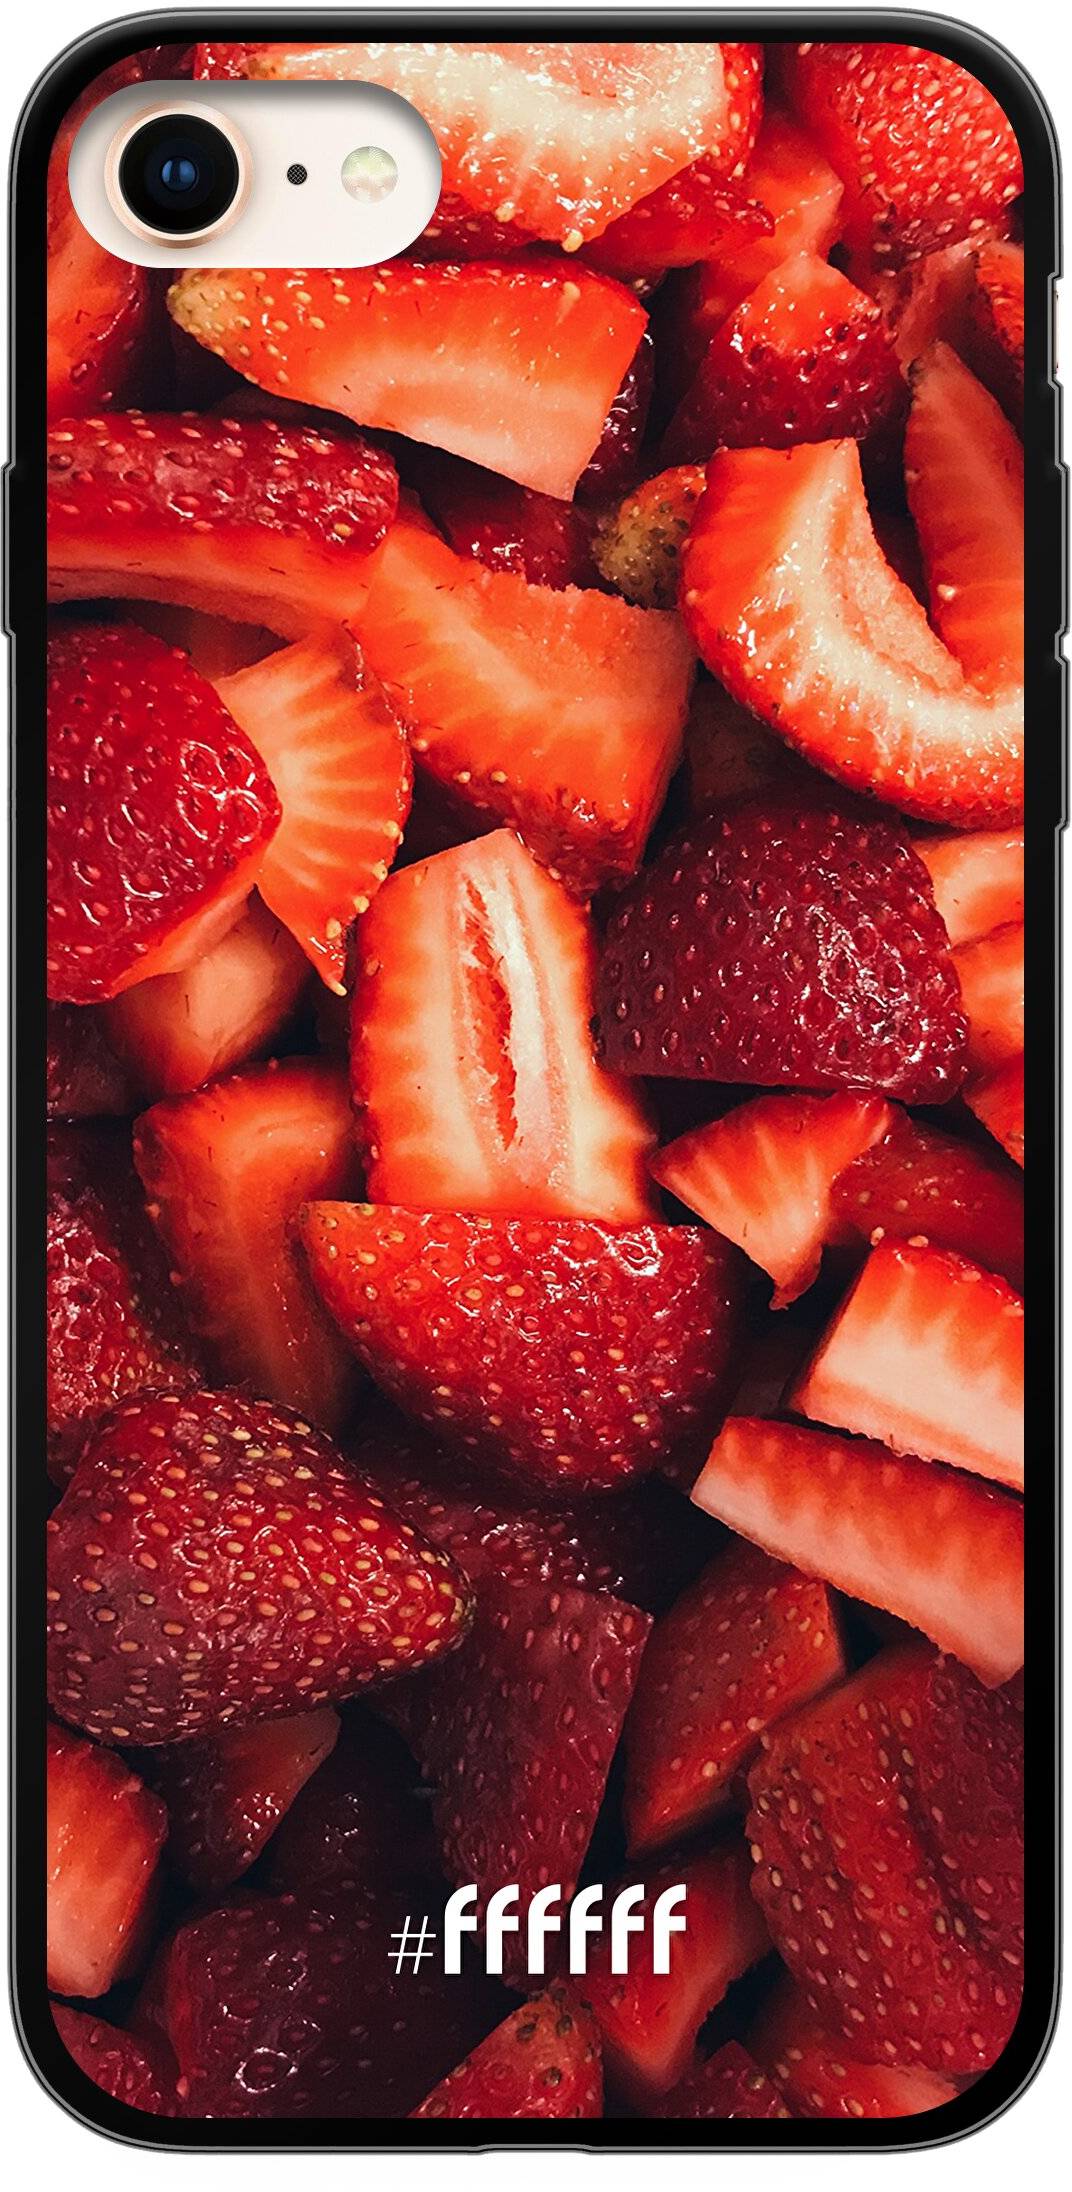 Strawberry Fields iPhone 7